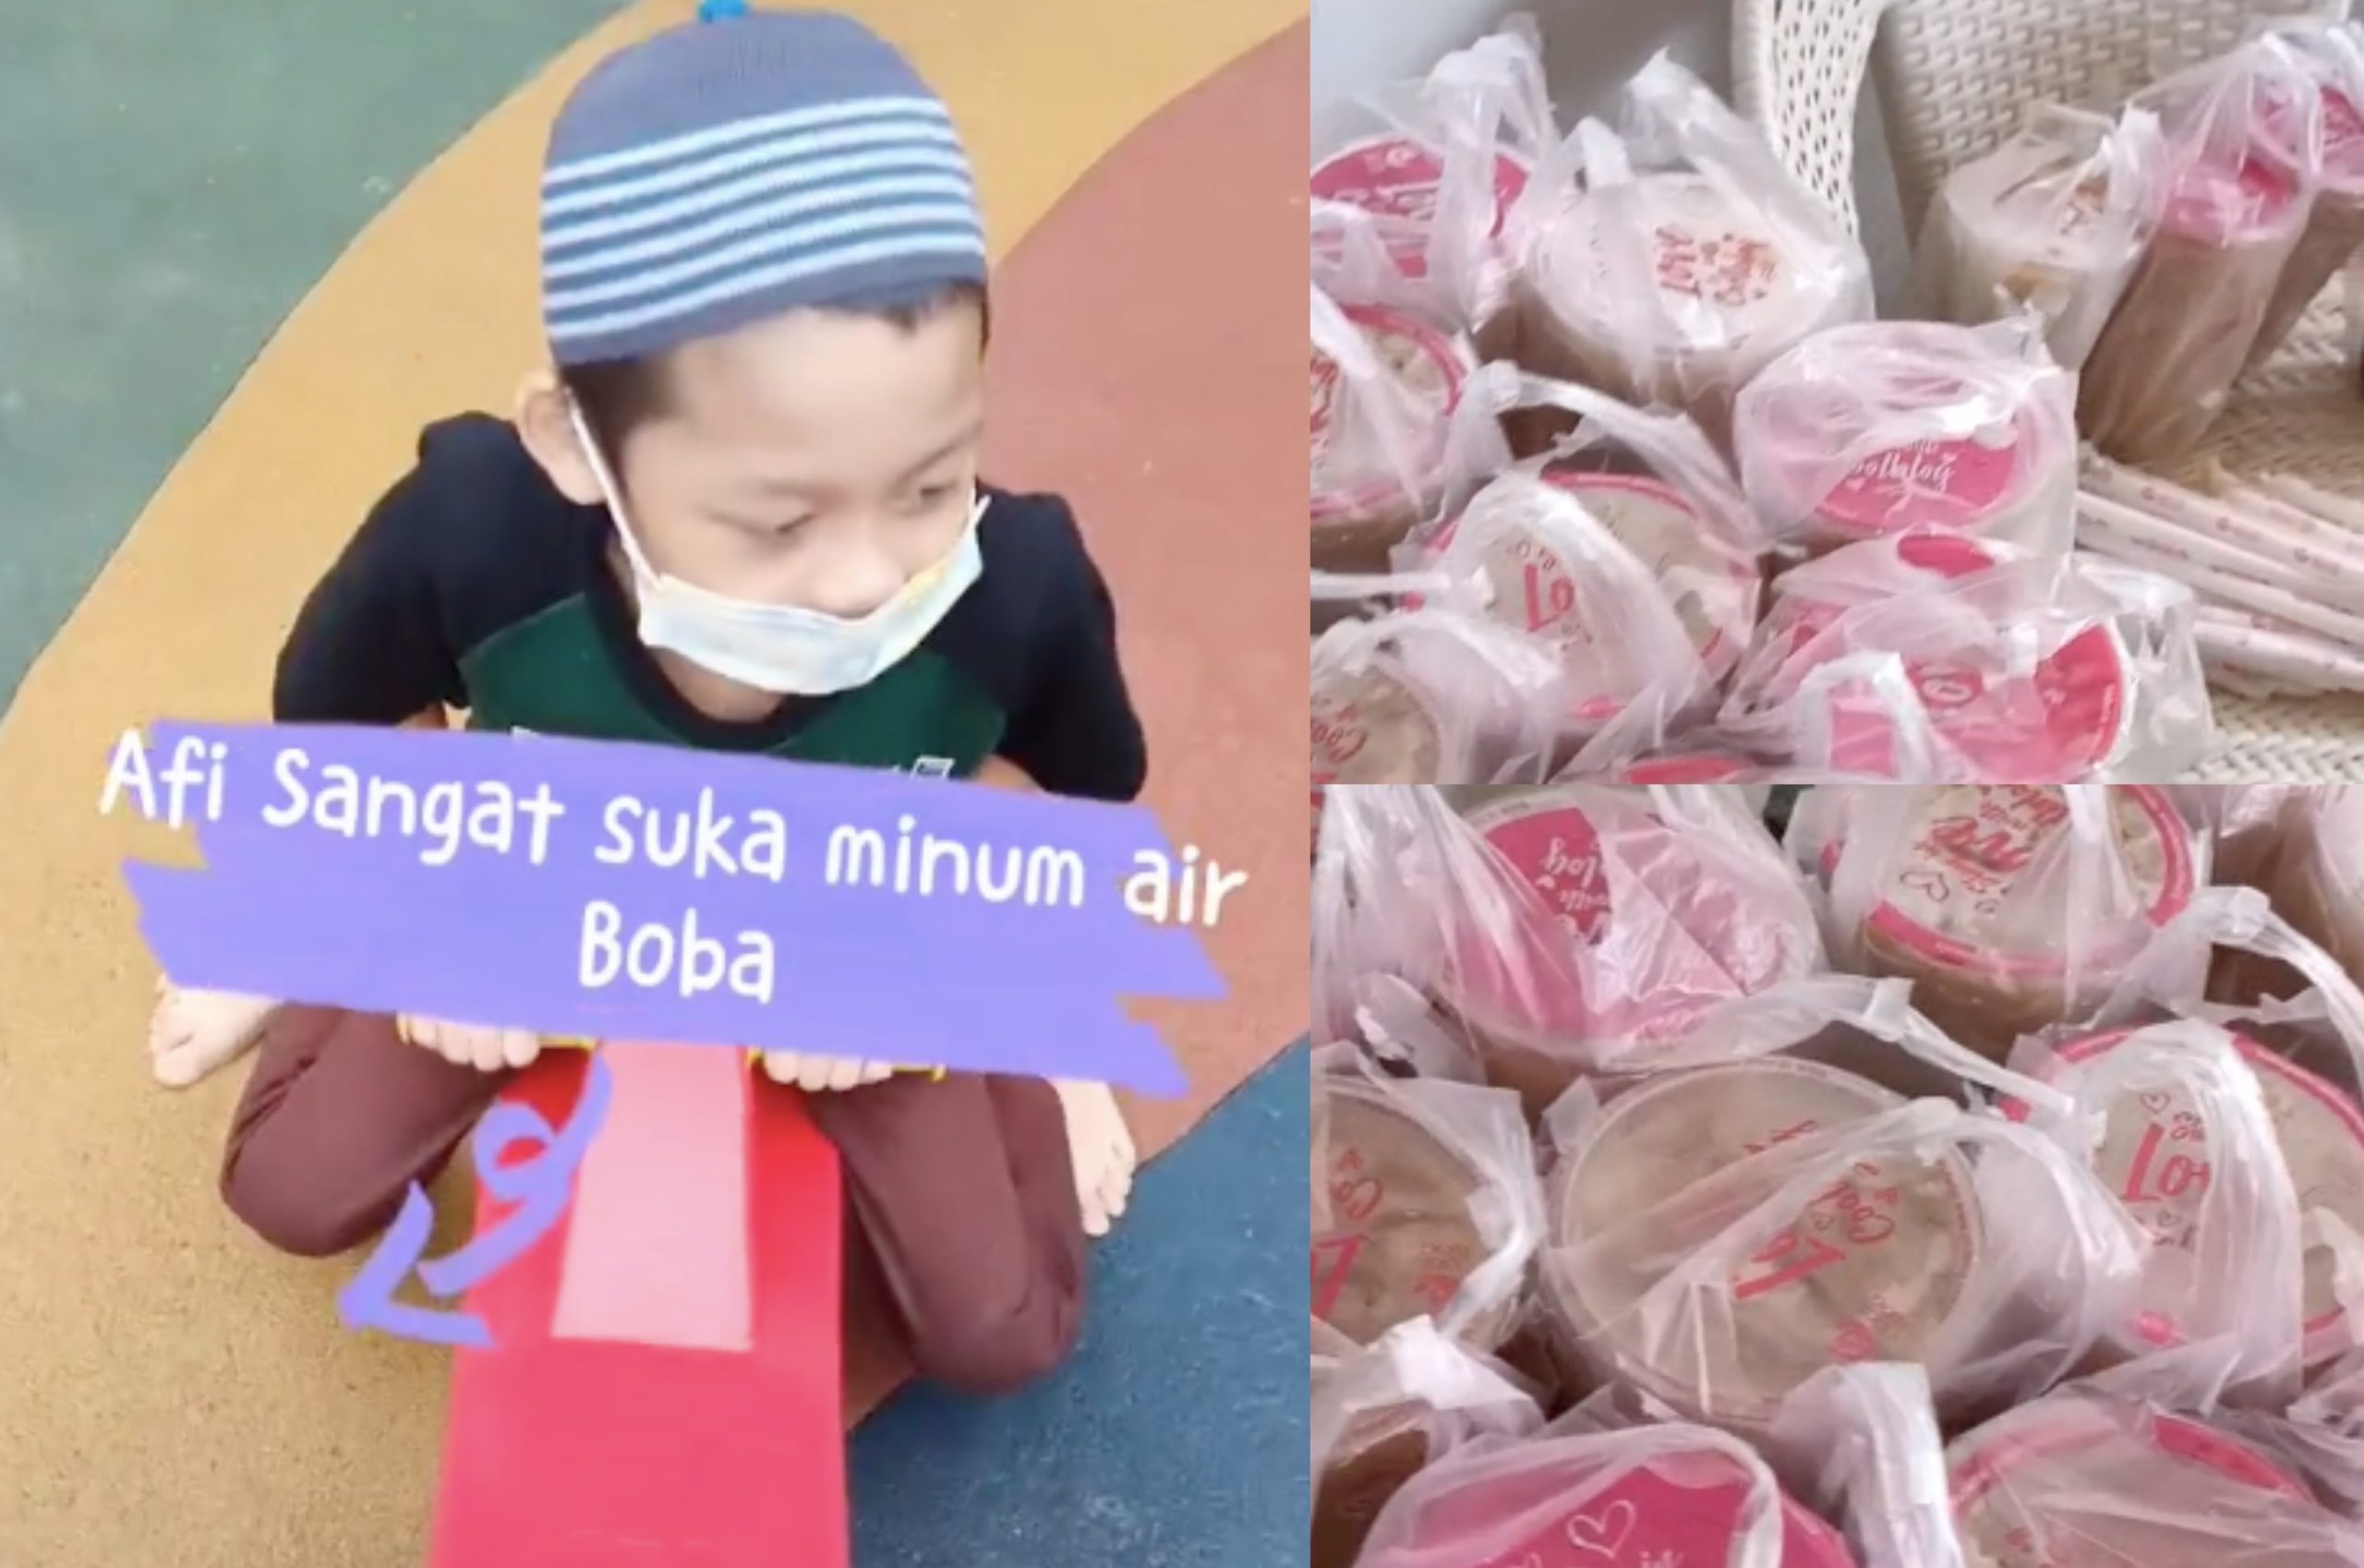 [VIDEO] Wanita Terkejut Anak Order 17 Cawan Air Boba RM150 – ‘Ya Allah Rasa Macam Nak Pengsan’